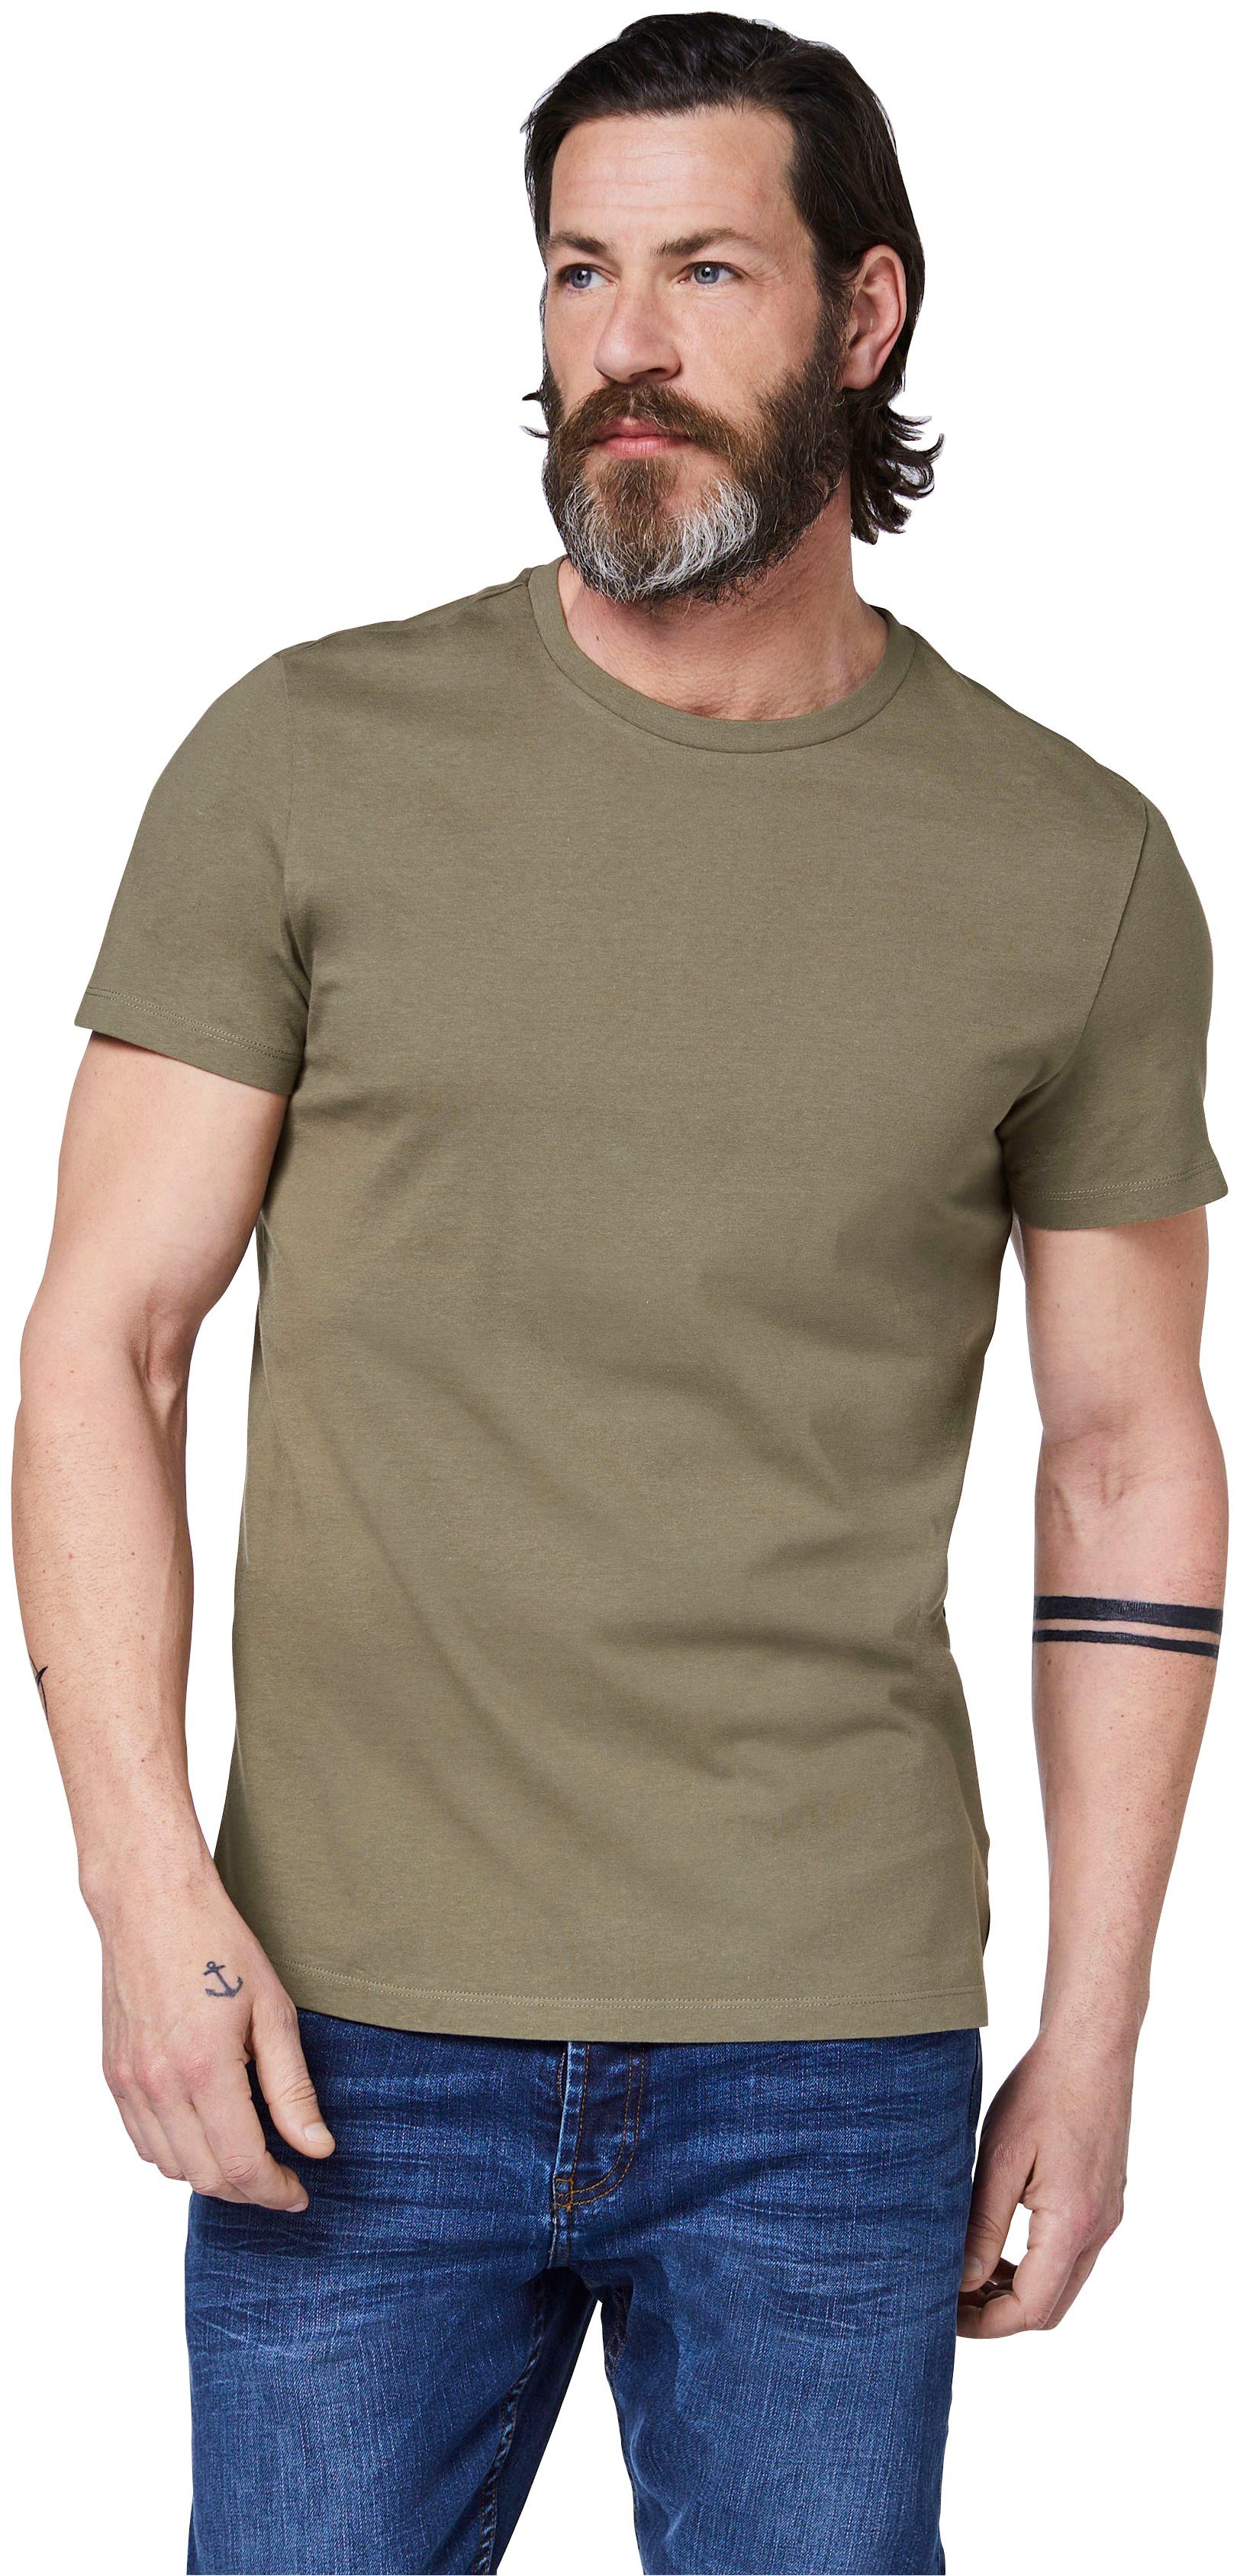 GARDENA Olive unifarben T-Shirt Dusty